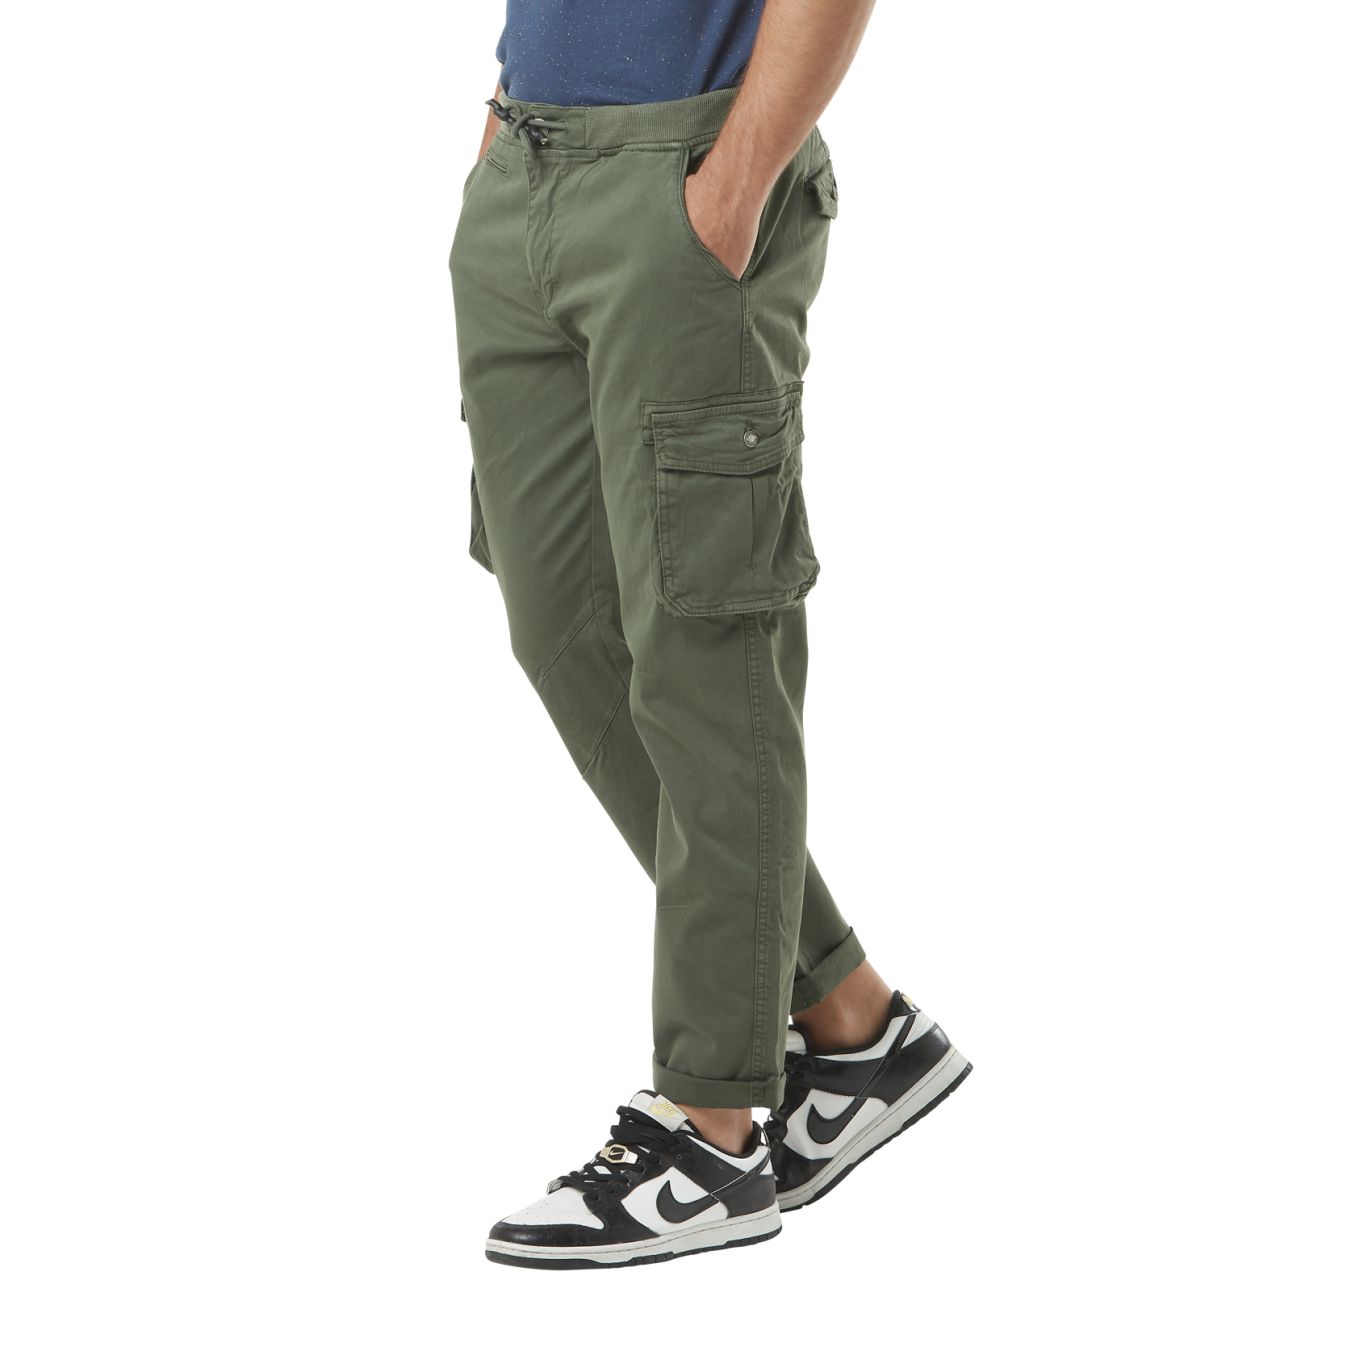 Pantalon cargo homme vert kaki poches laterales avec écusson brodé